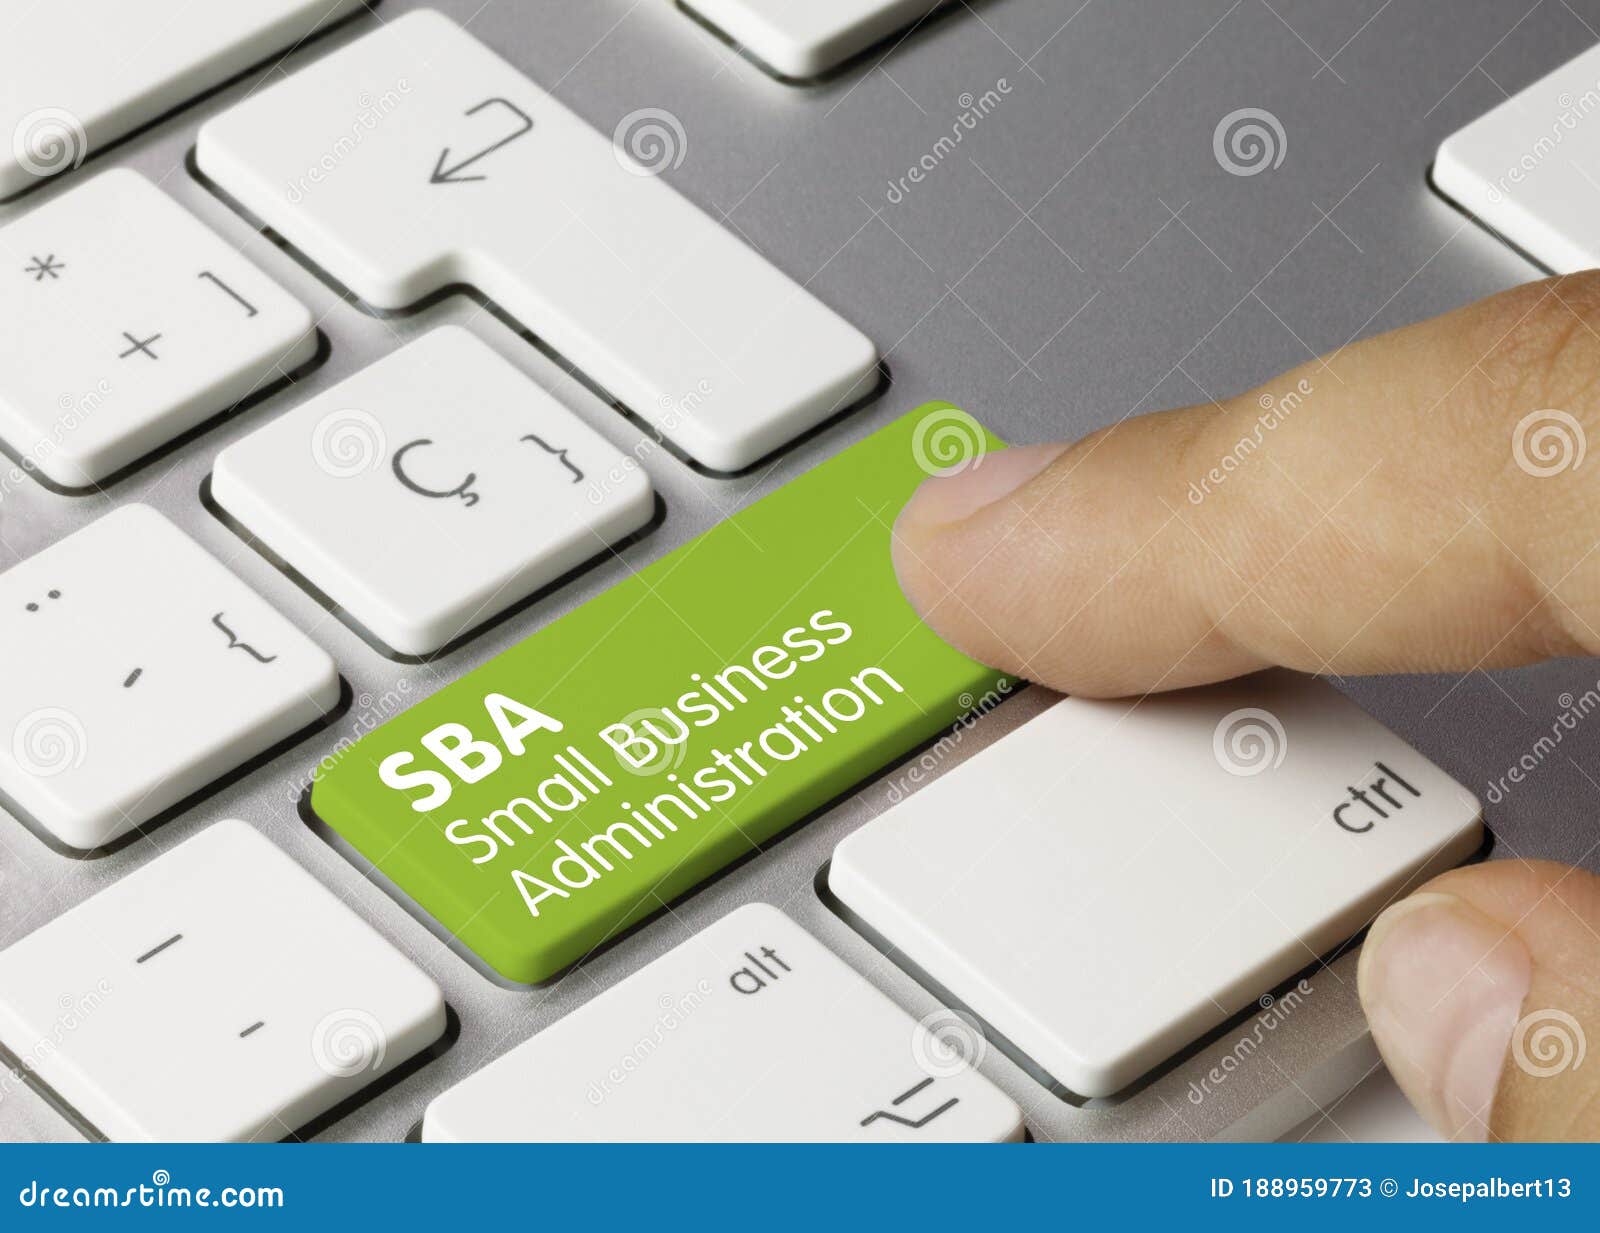 sba small business administration - inscription on green keyboard key